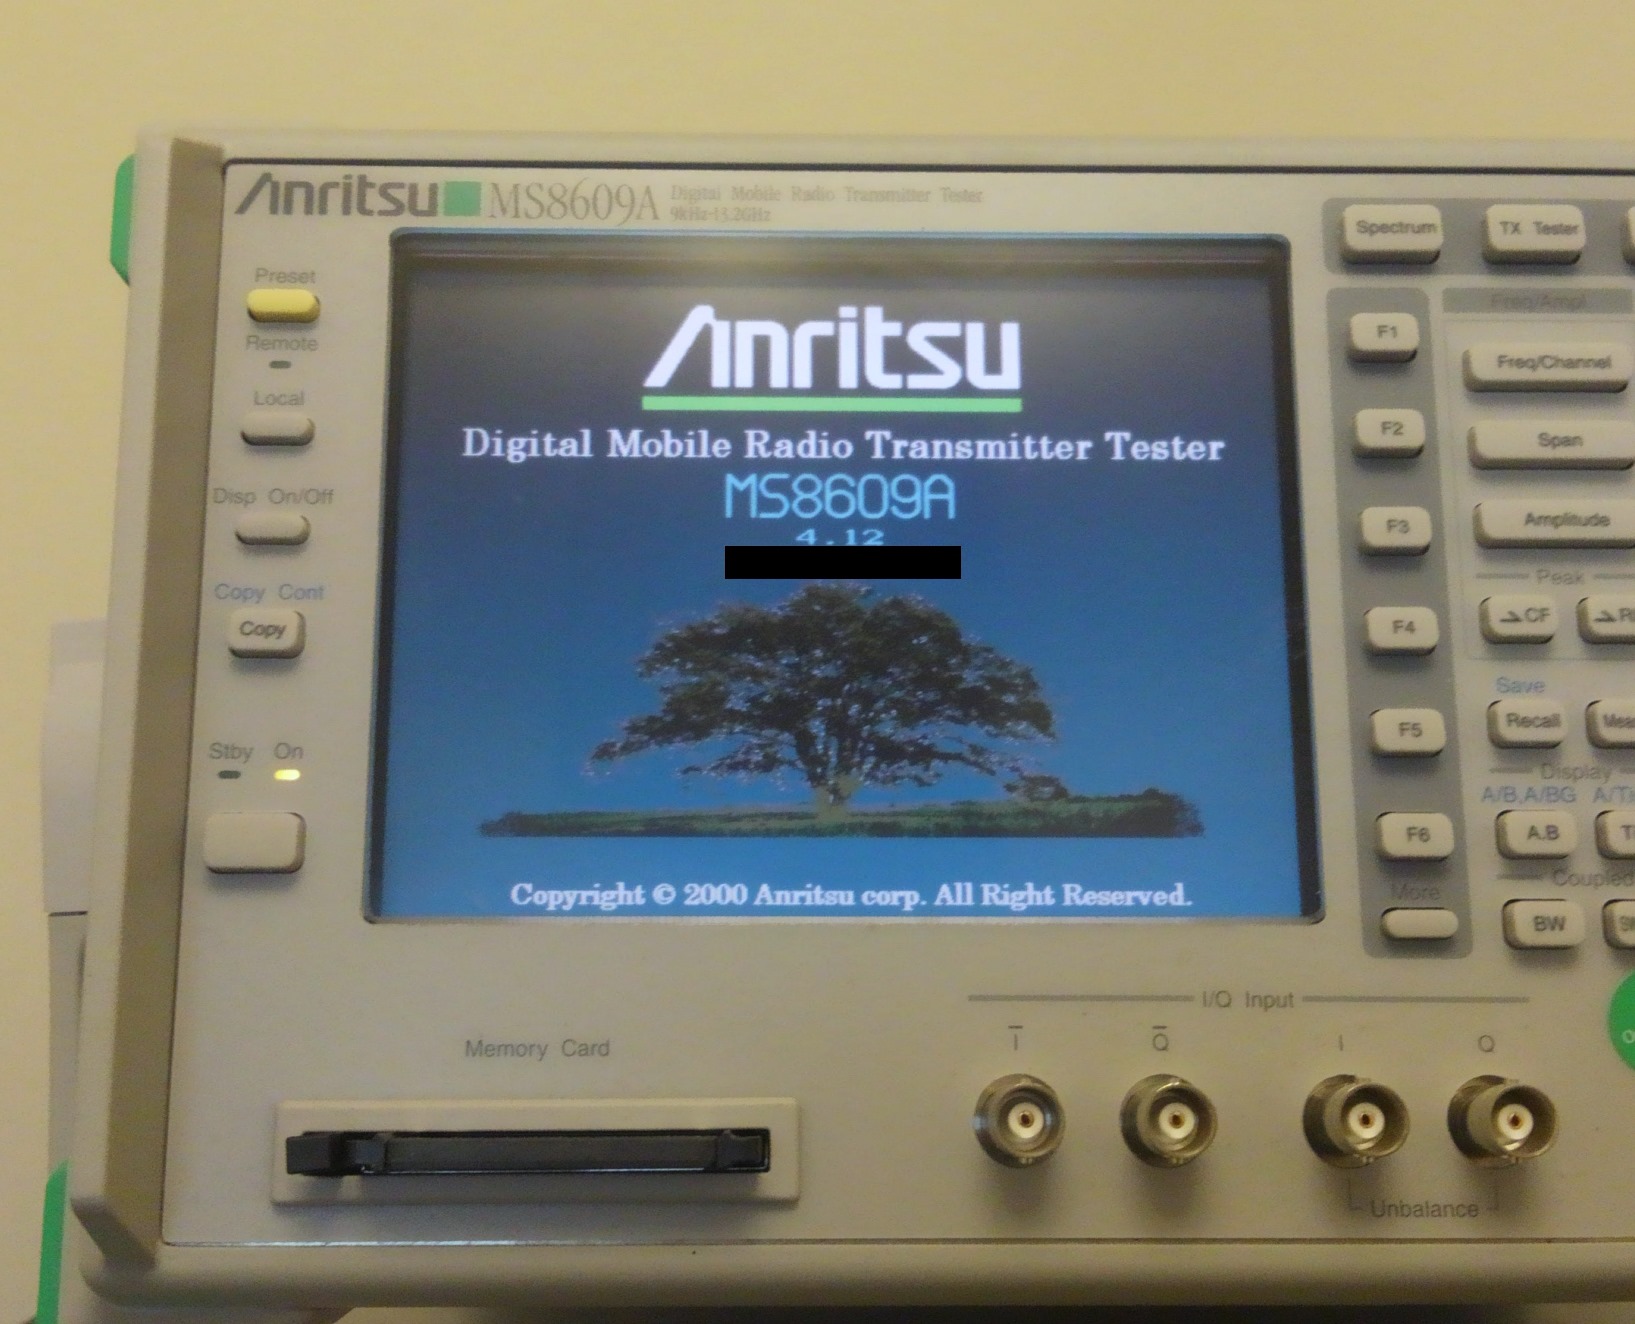 Anritsu MS8609A 9kHz - 13.2GHz Spectrum/Signal Analyzer - Short Review